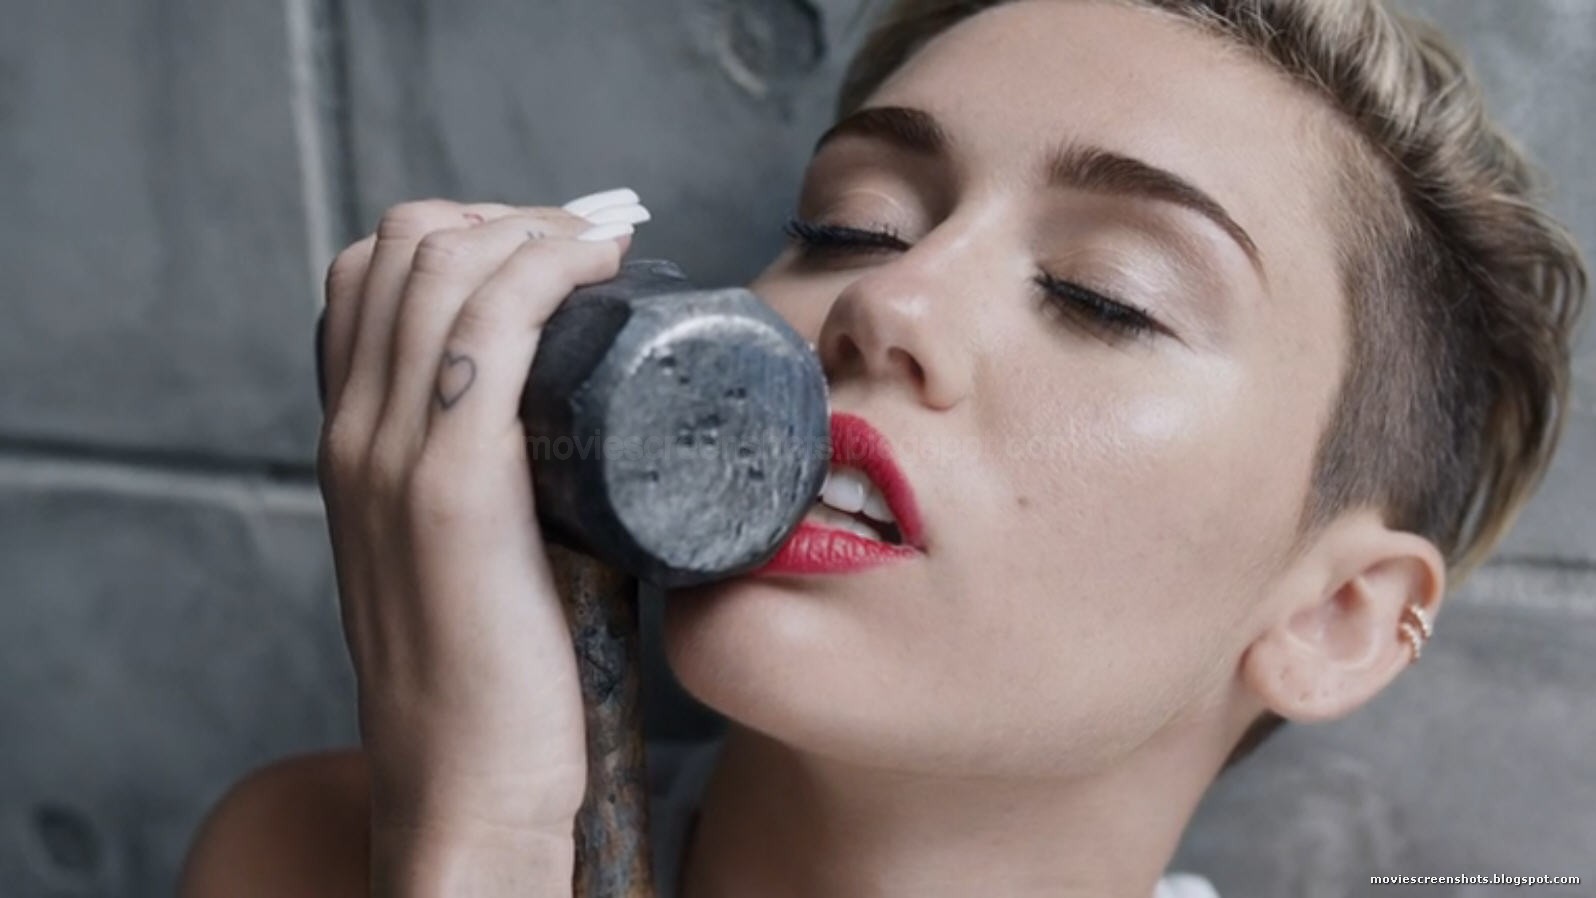 Vagebond S Movie Screenshots Miley Cyrus Wrecking Ball